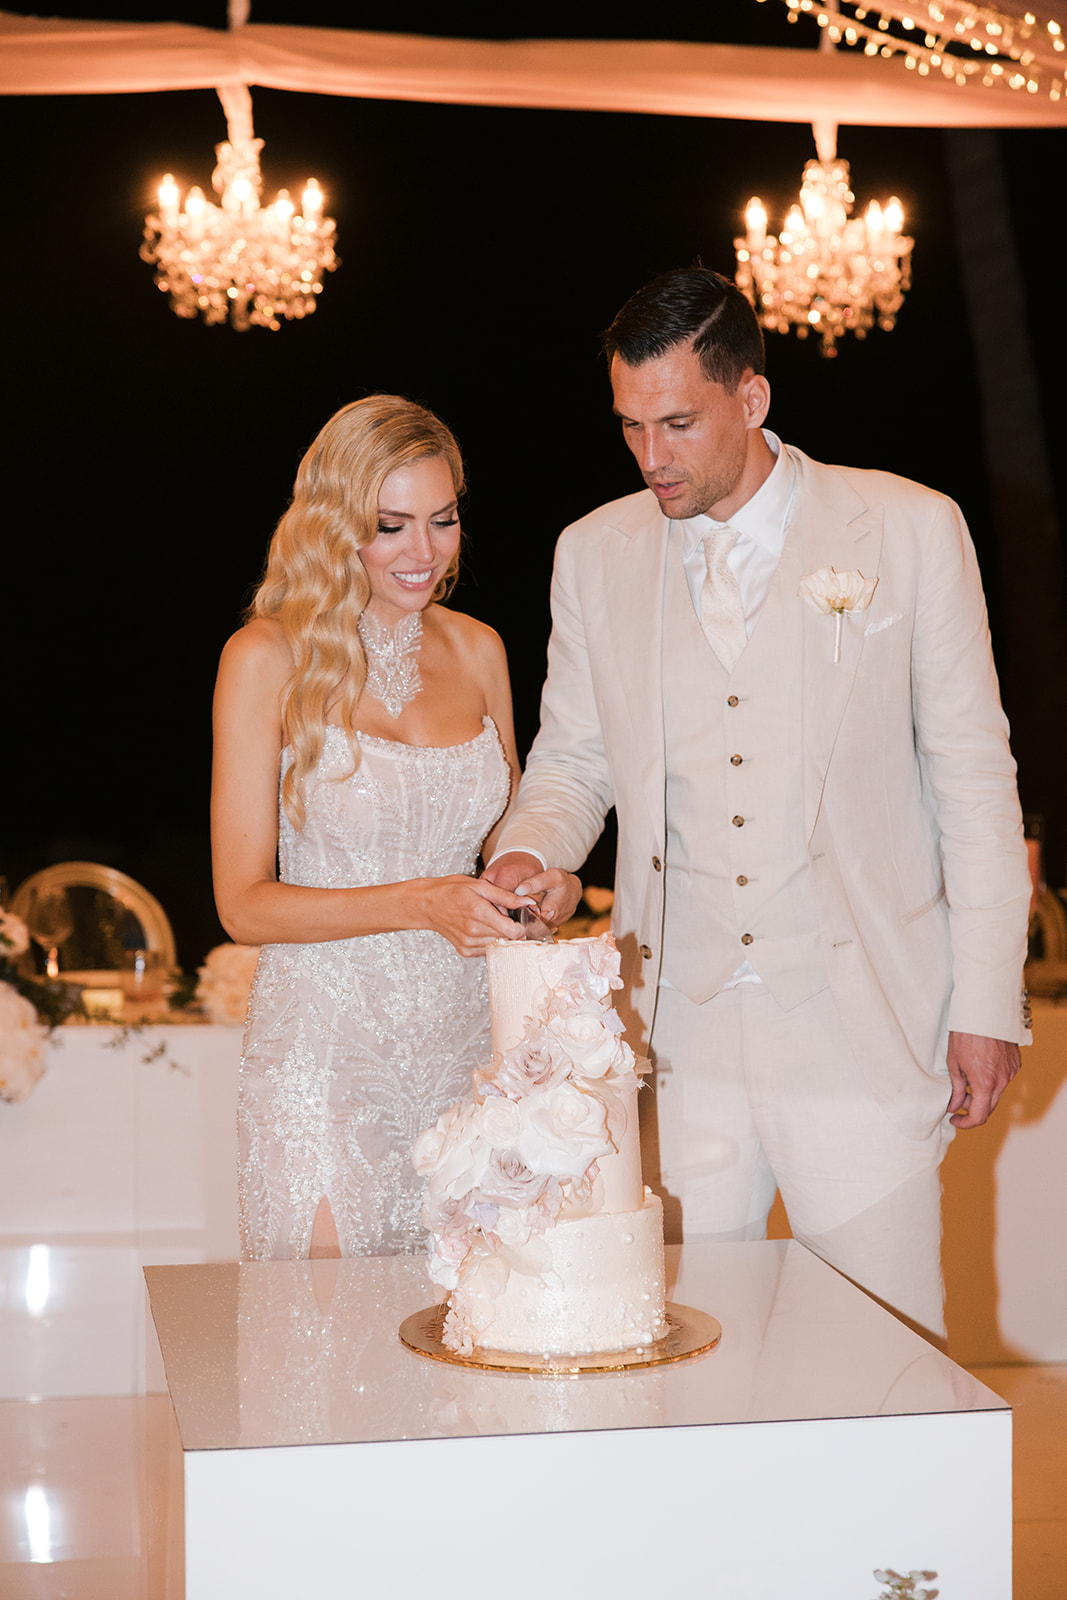 Real-Wedding-Nicole-Alex-Port-Douglas-reception-newlyweds-slicing-the-cake